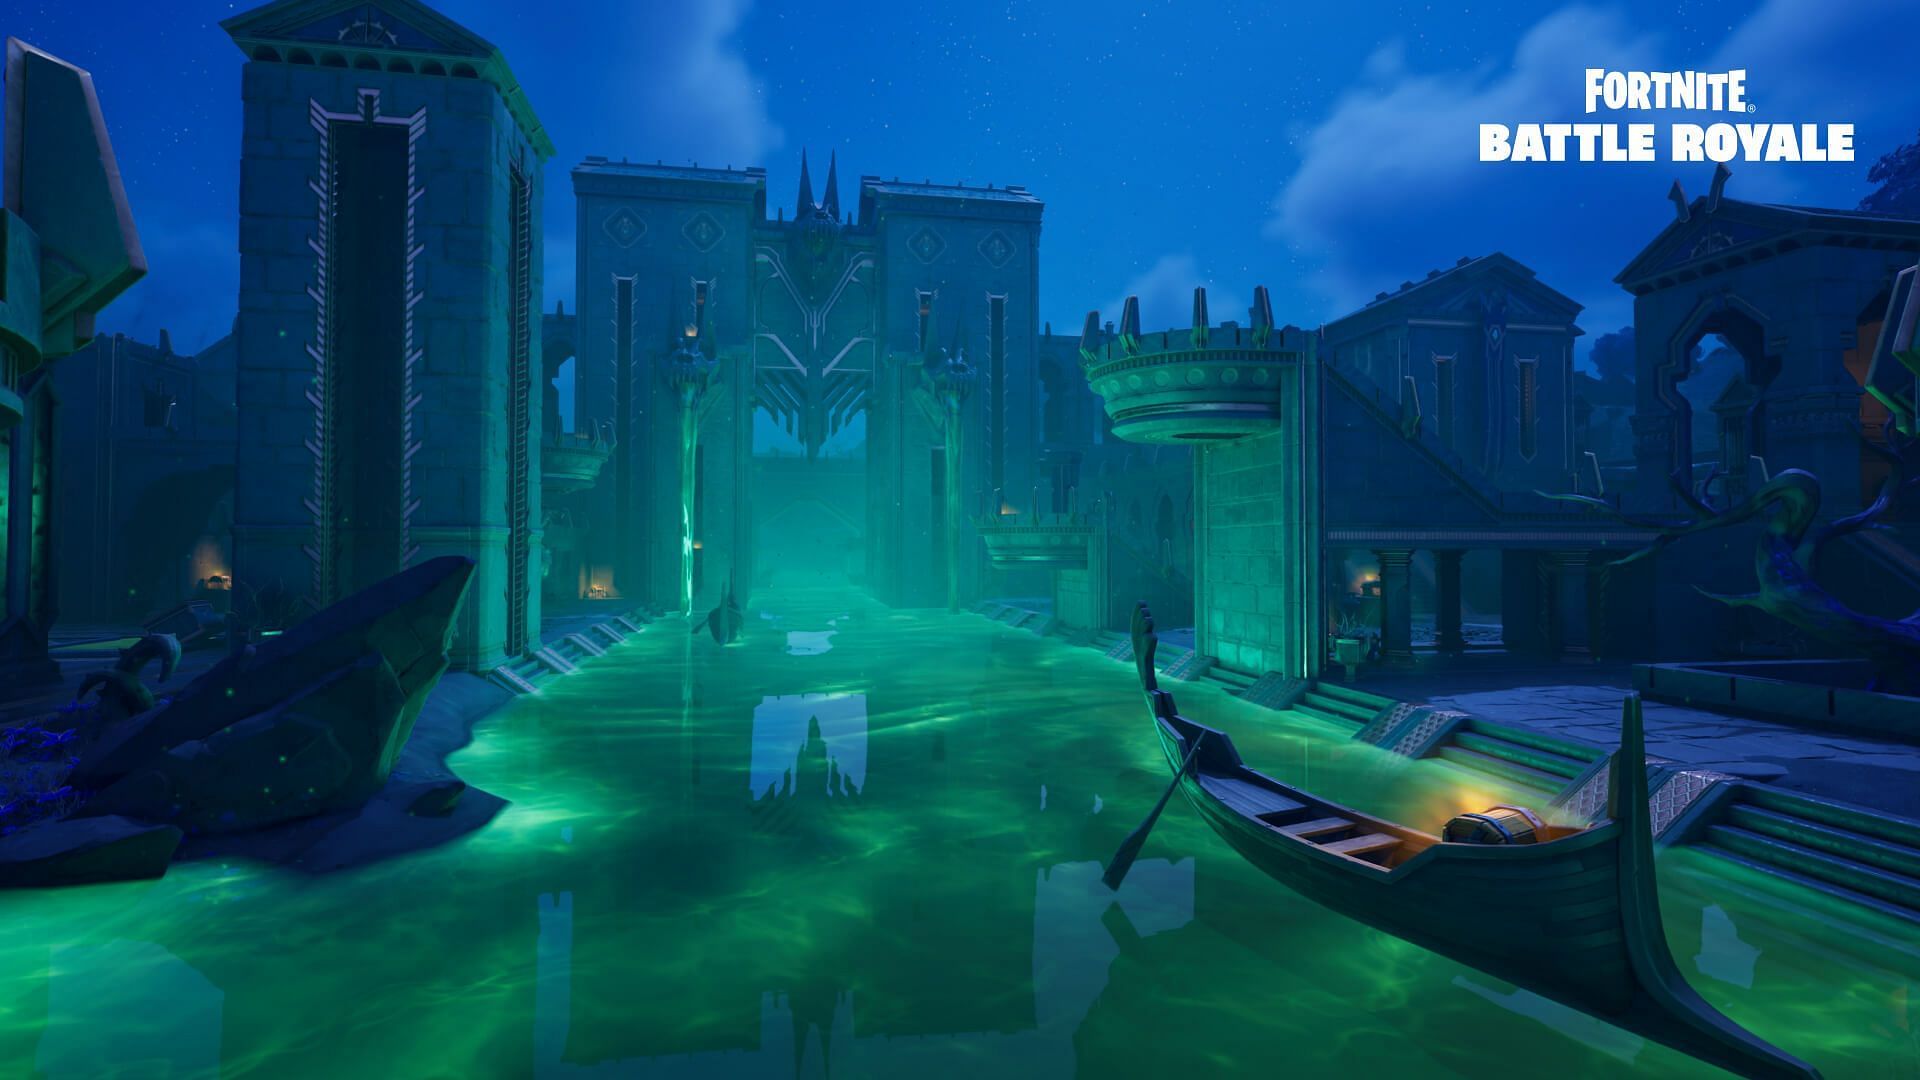 Grim Gate (Image via Epic Games/Fortnite)